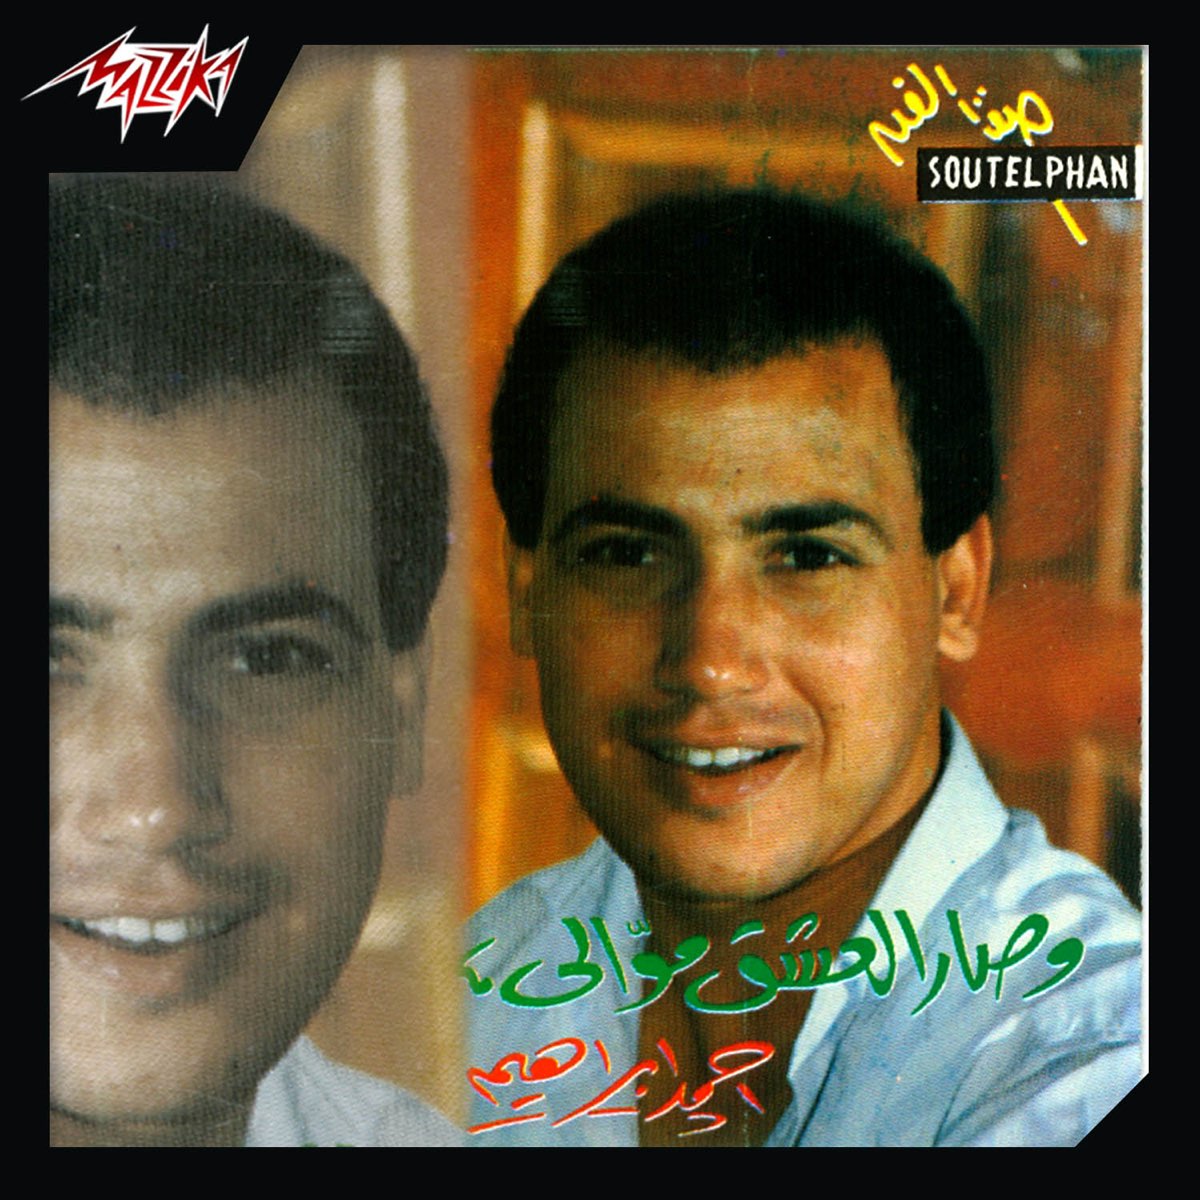 We Sar El Eshk Mawaly - Album by Ahmed Ibrahim - Apple Music